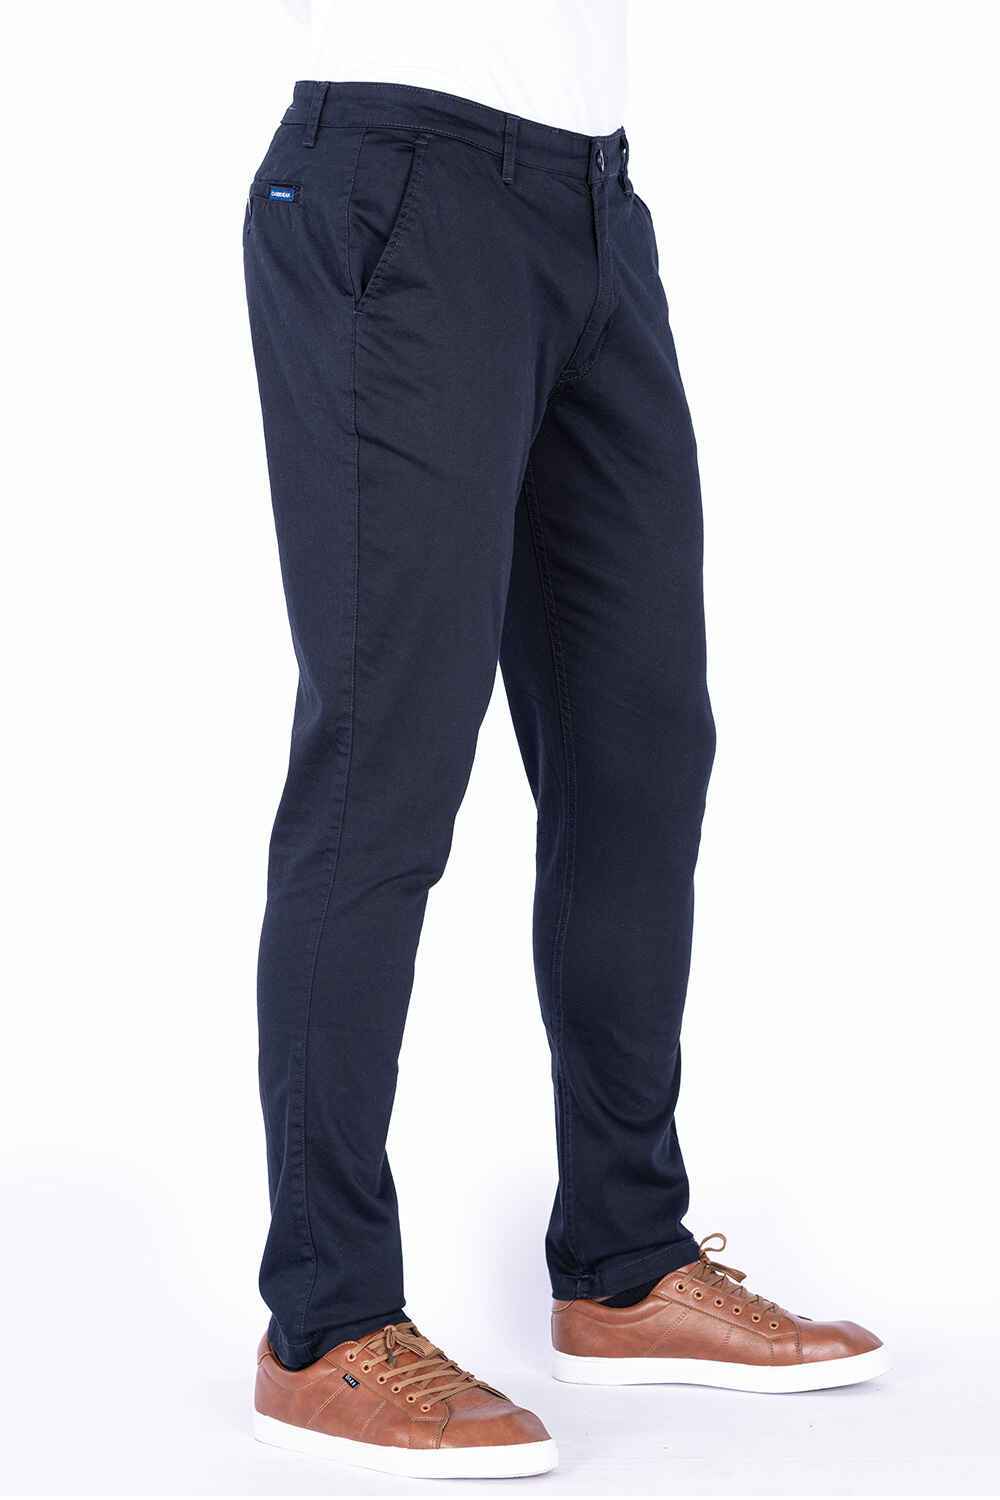 PURPLE BRAND- Relaxed Cargo Denim Jeans- Man- 36 - Black | Jeans brands,  Denim jeans men, Slim fit jeans